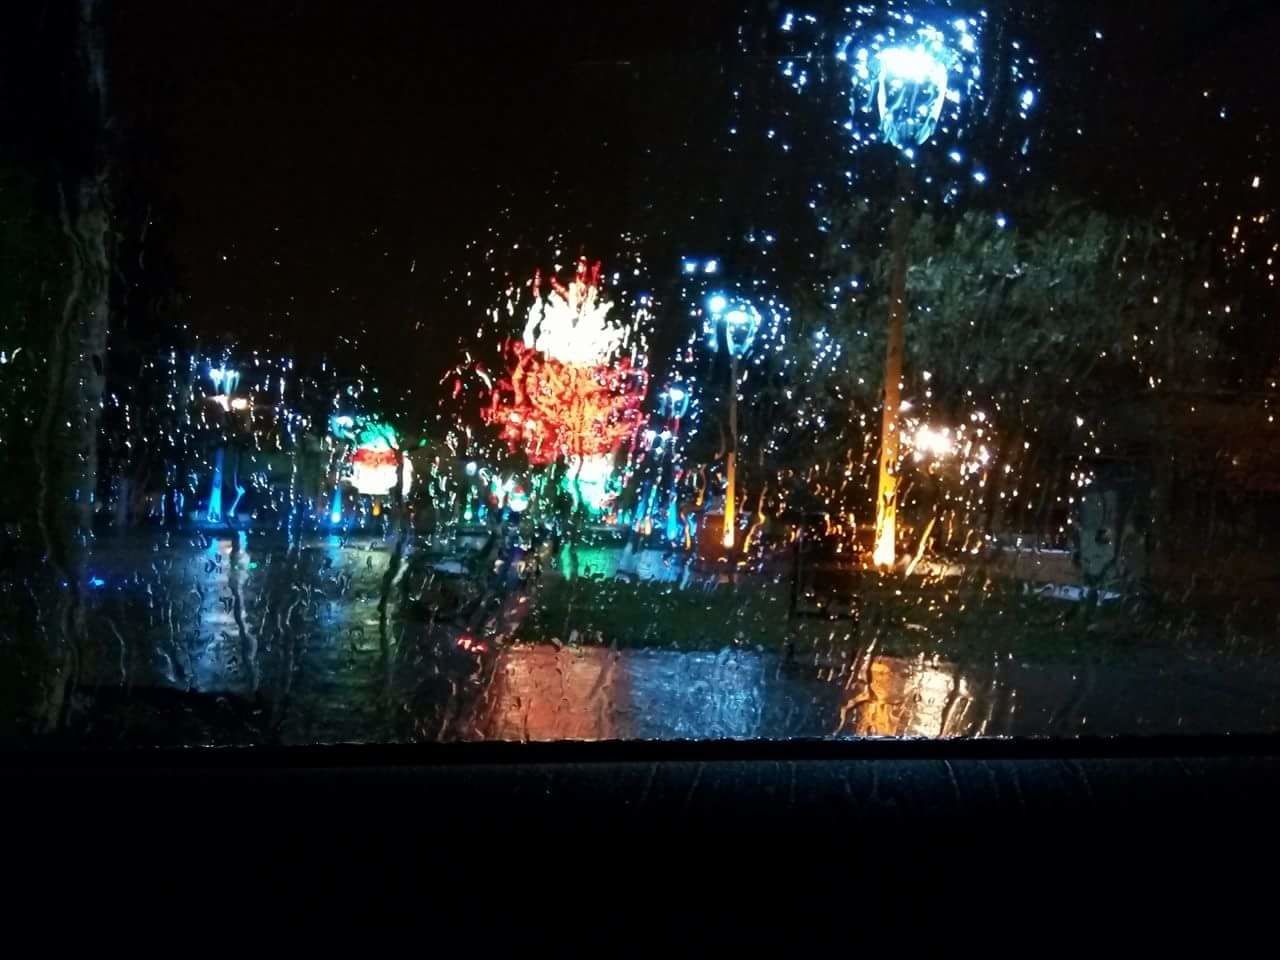 CLOSE-UP OF WET CAR WINDOW IN RAIN